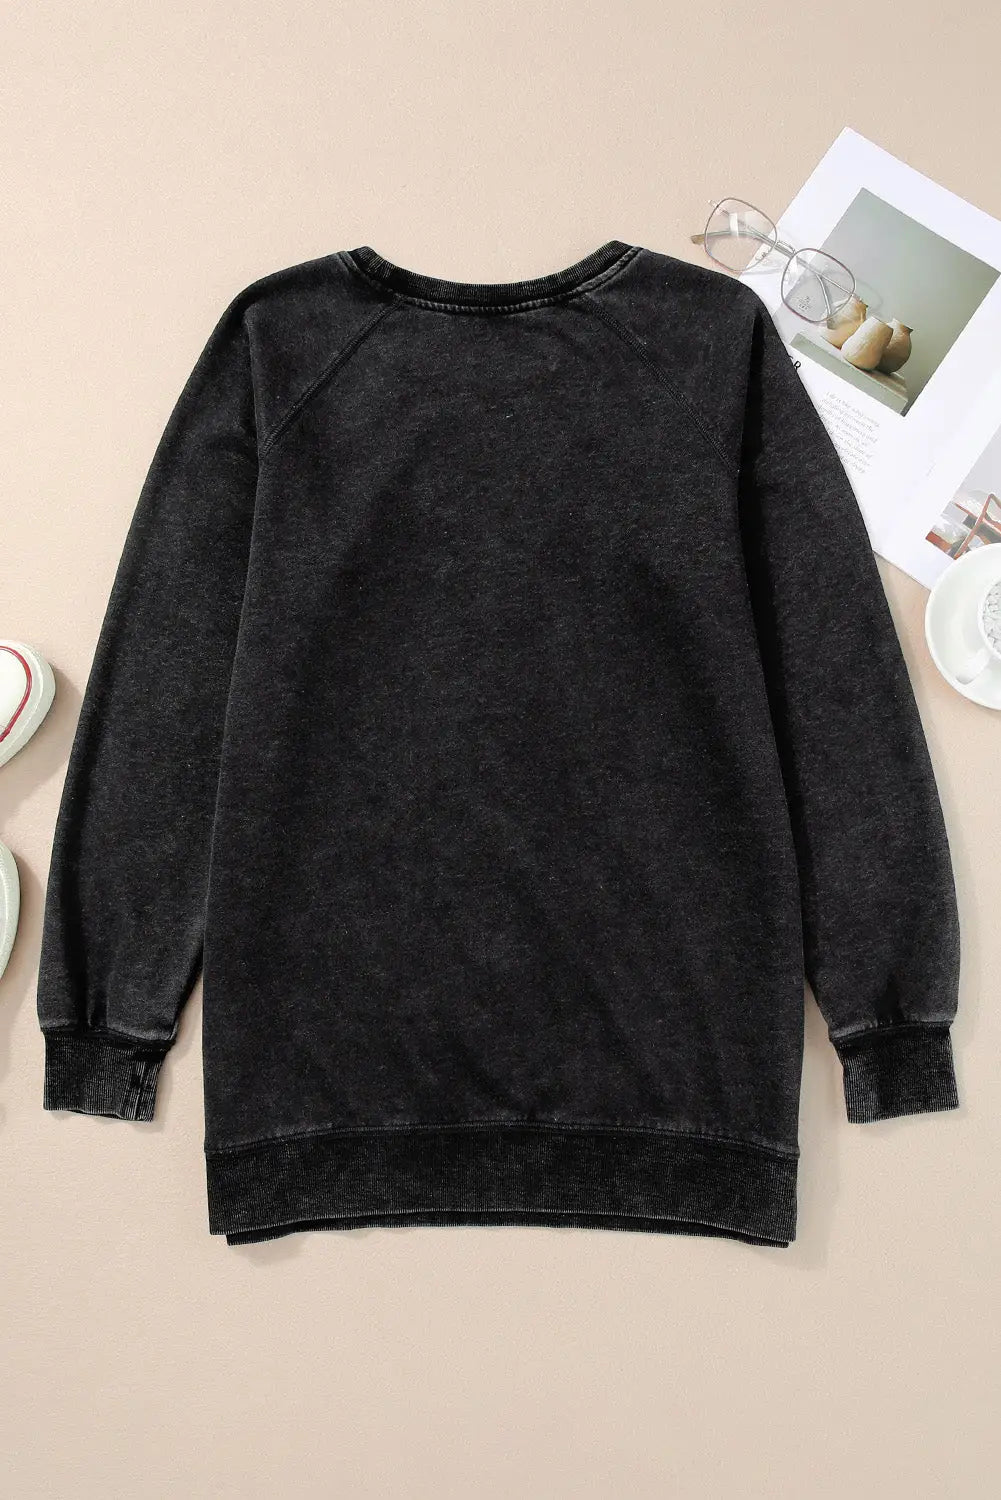 Black mineral wash oversized pullover sweatshirt - tops